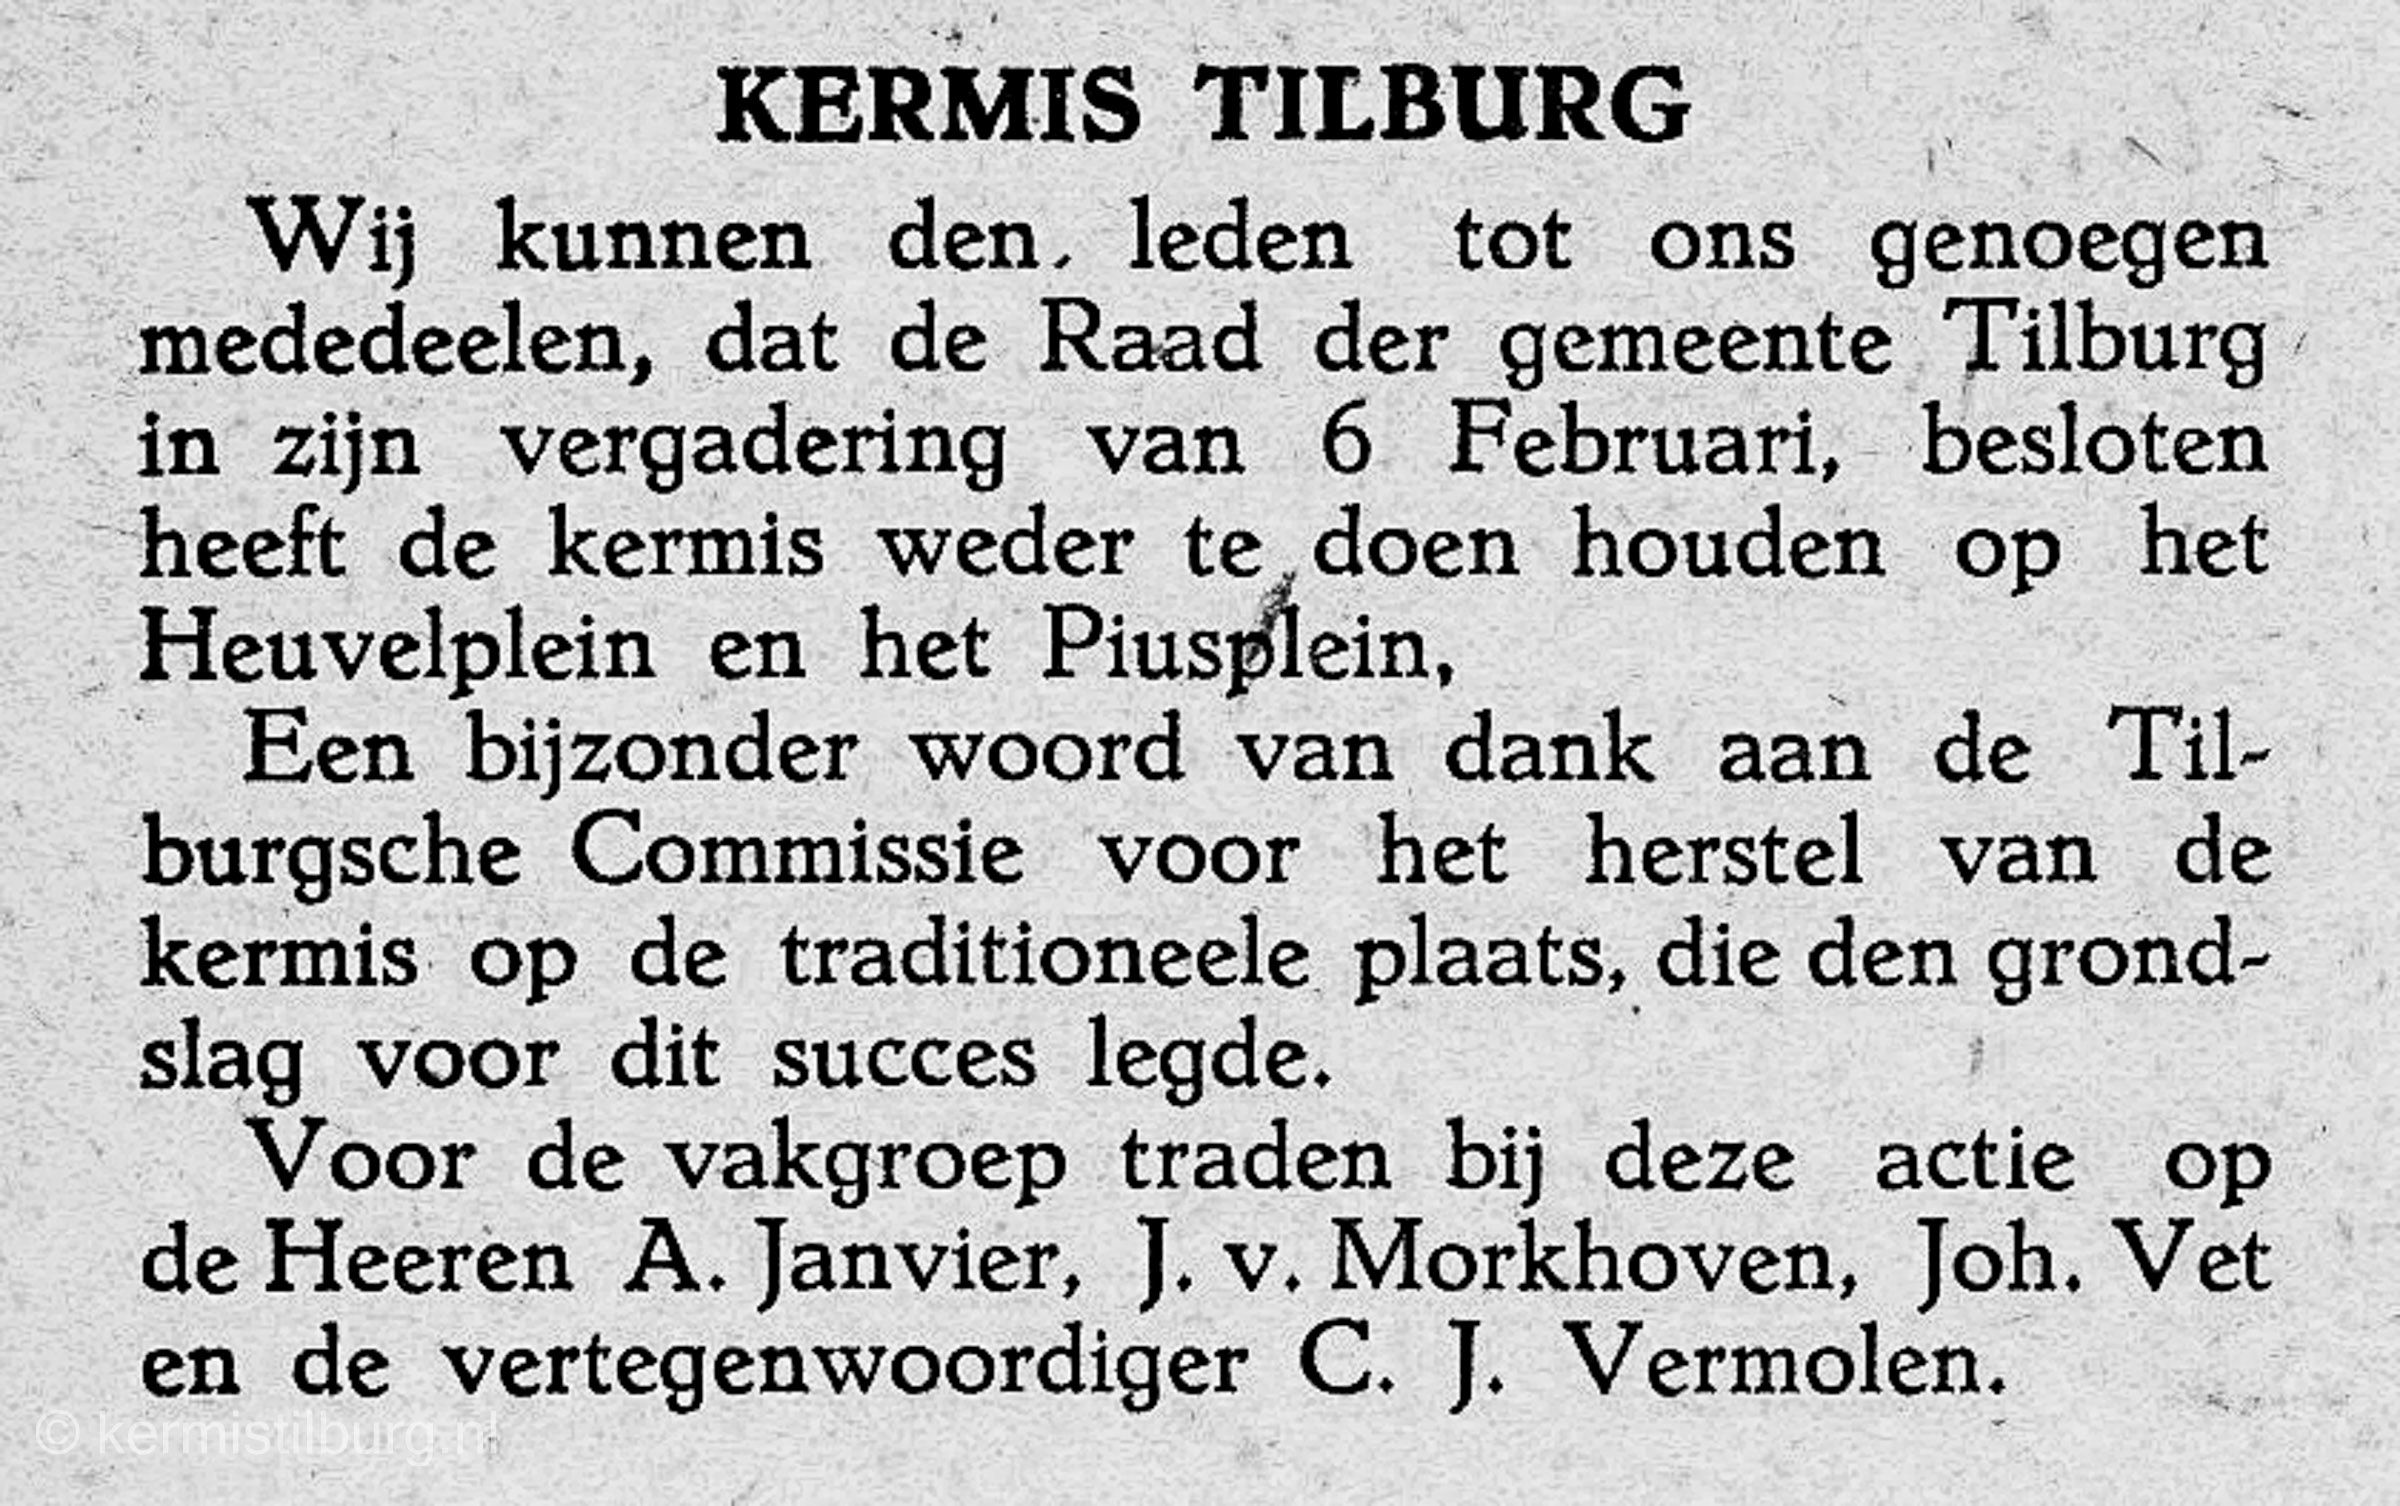 1946, Kermis, Tilburg, Tilburgse kermis, krant